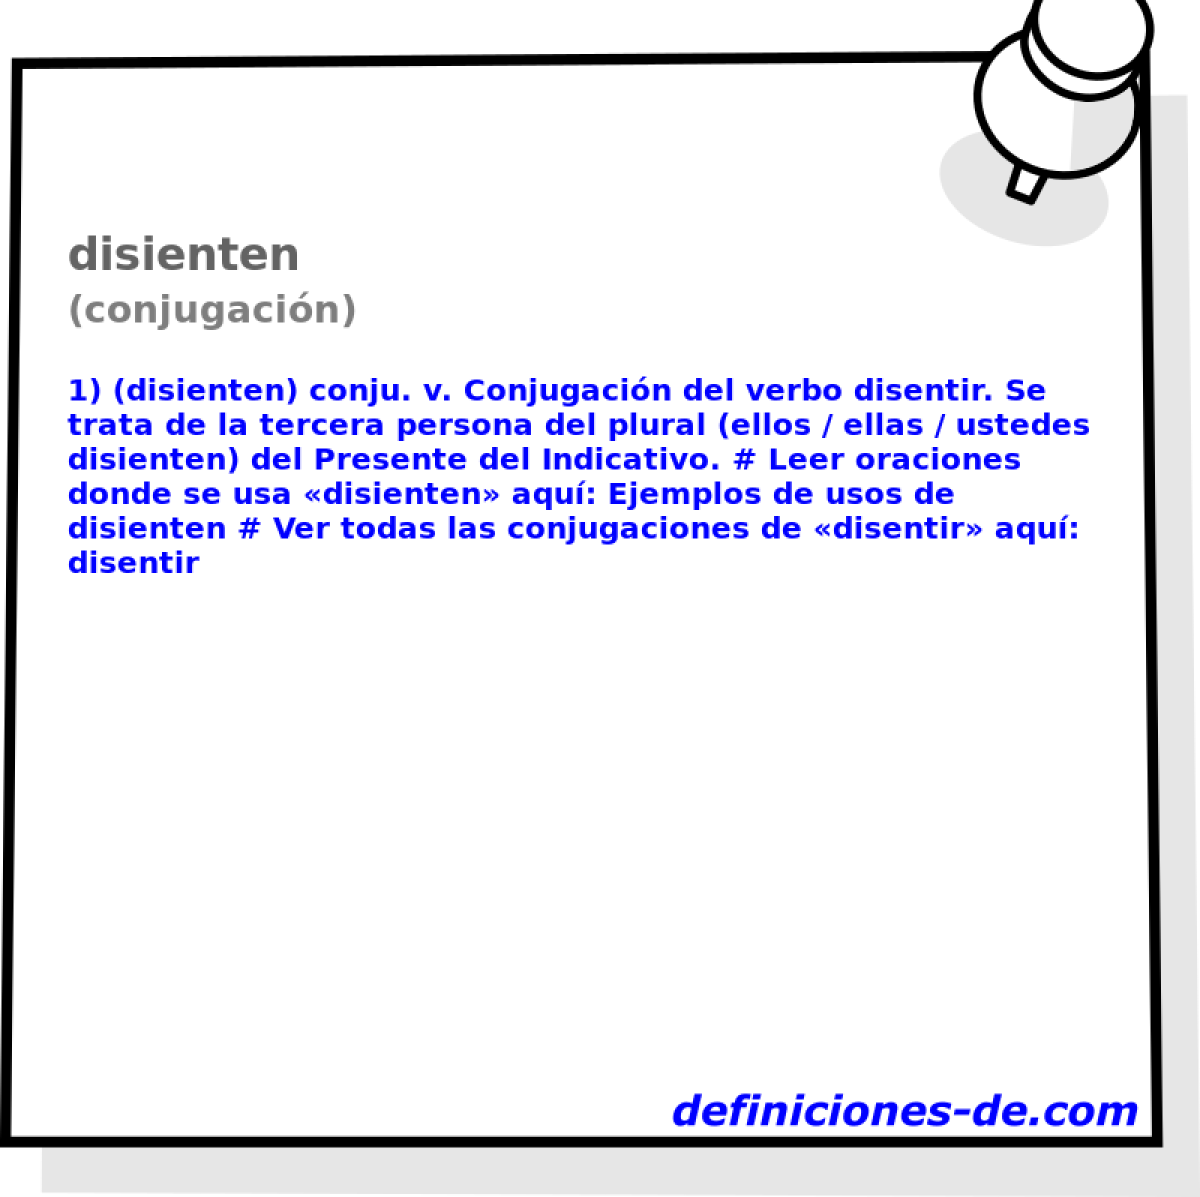 disienten (conjugacin)